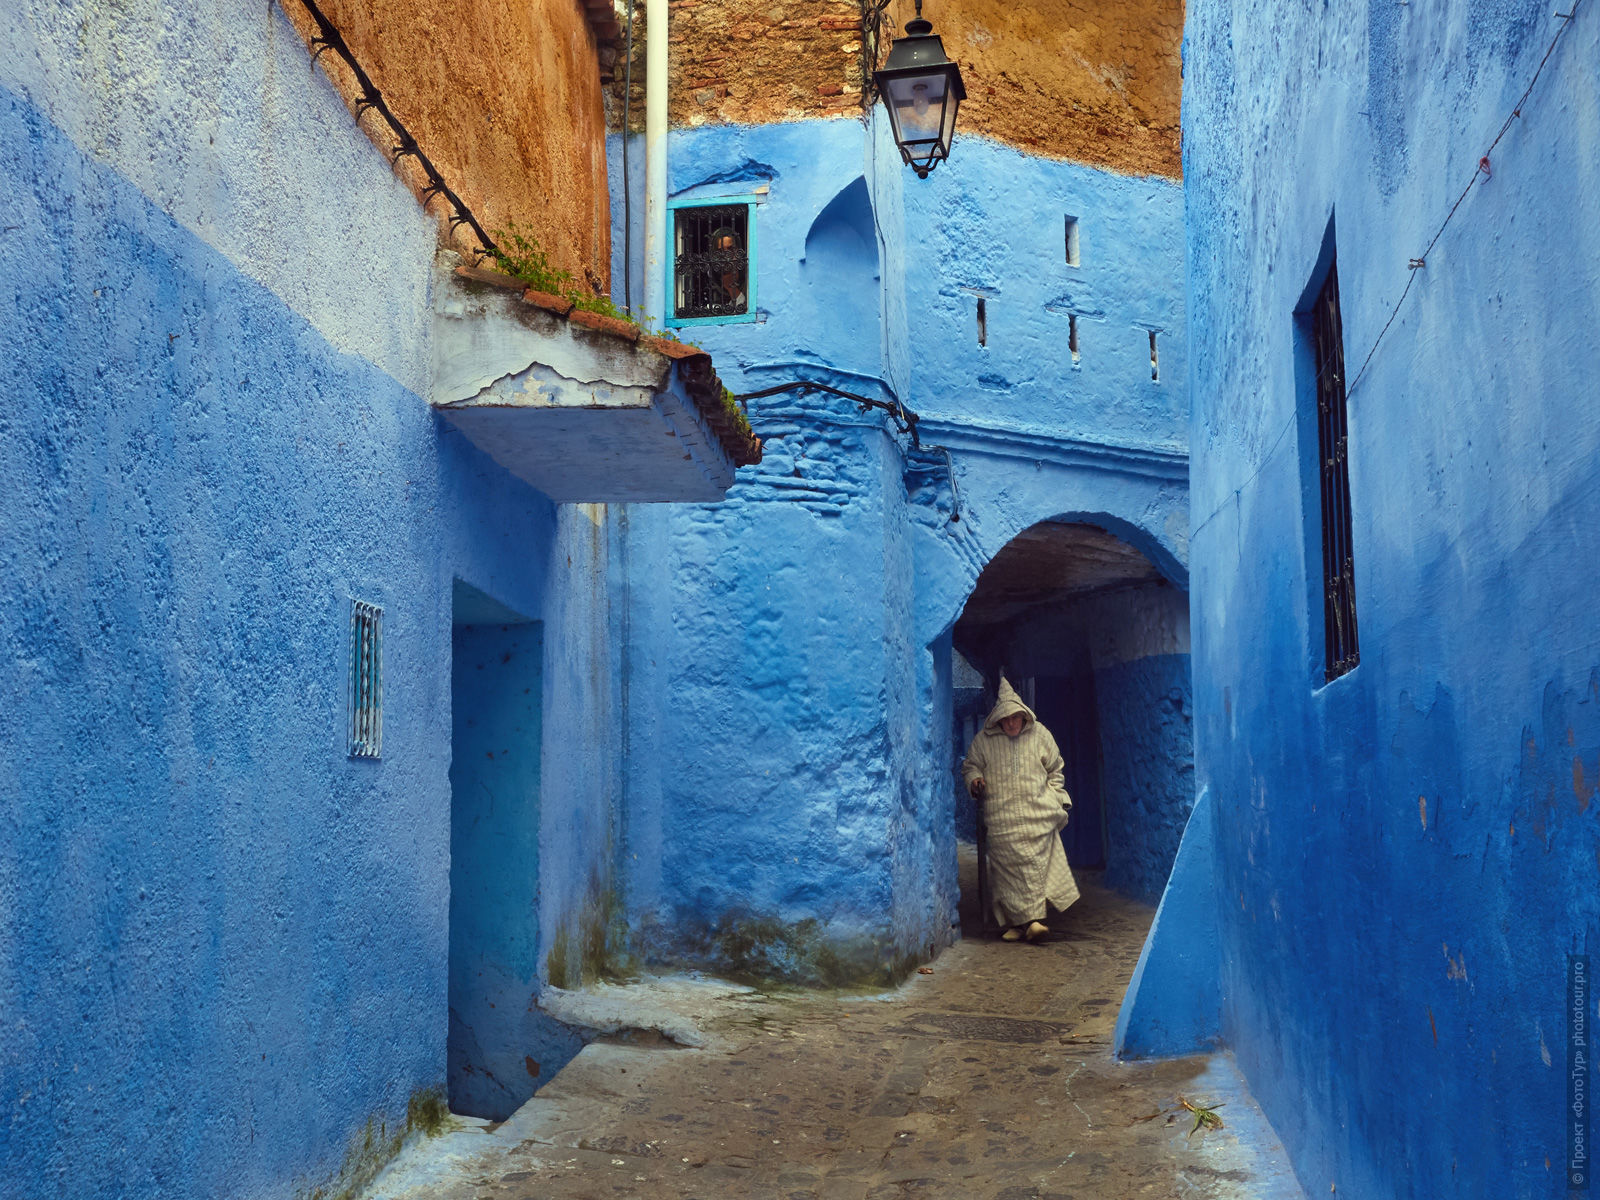 Streets of Chefchaouen Medina, Morocco. Adventure photo tour: medina, cascades, sands and ports of Morocco, April 4 - 17, 2020.